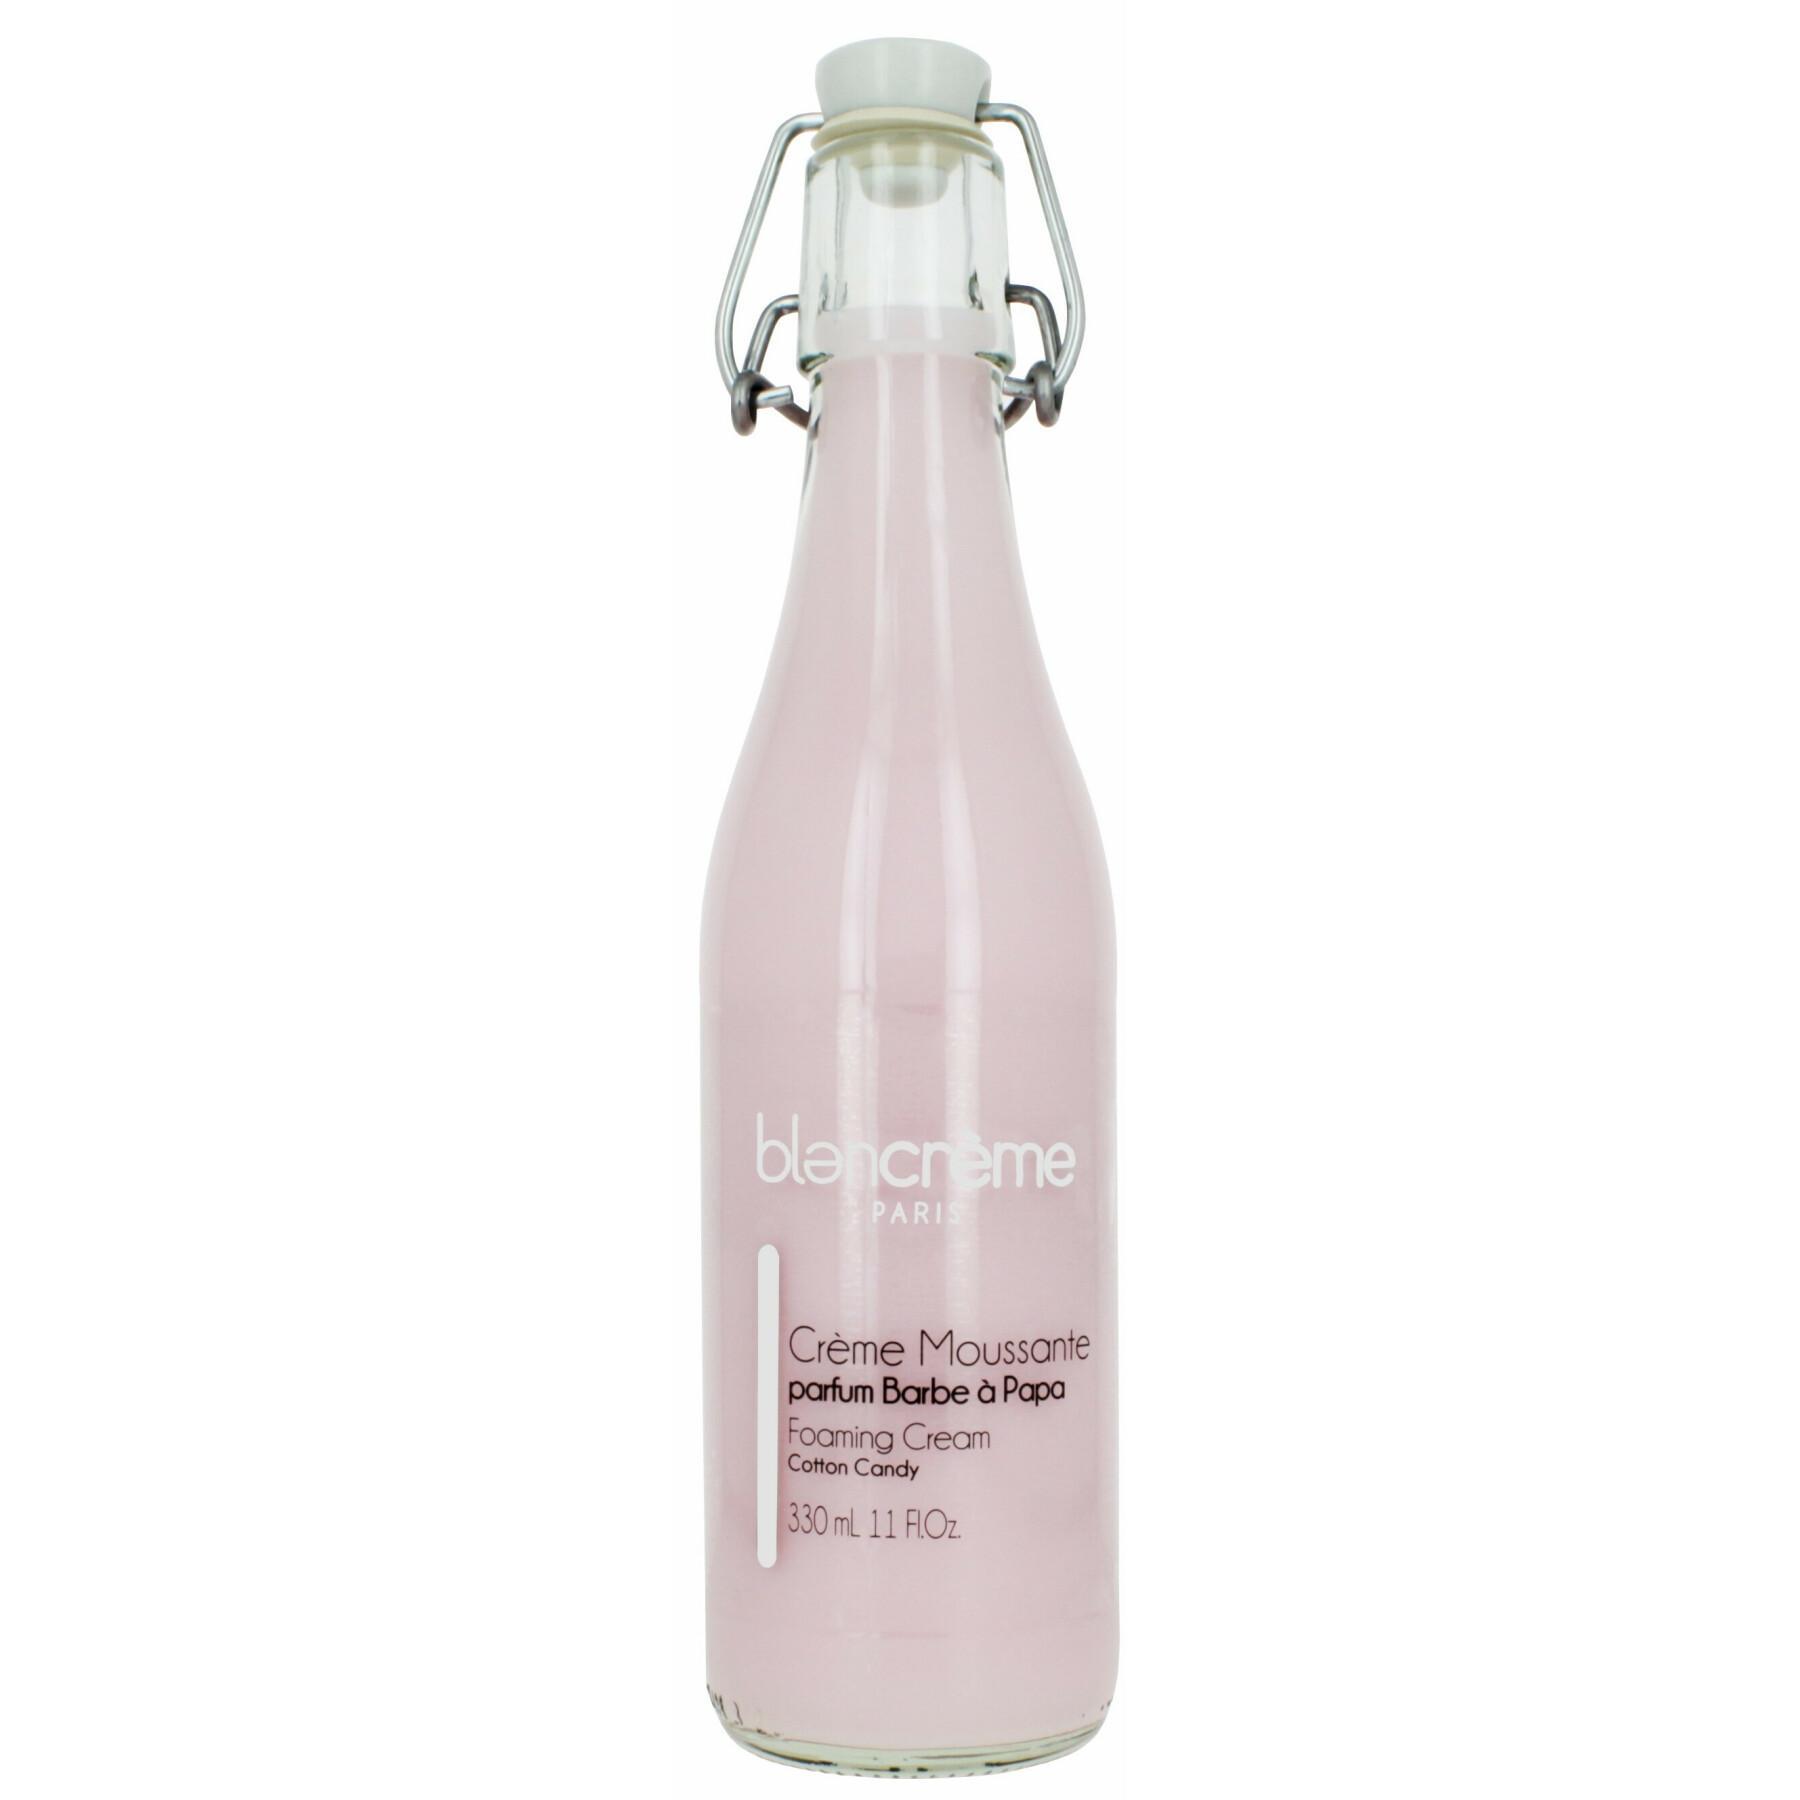 Cotton Candy Foaming Shower Cream - hearts - Blancreme 330 ml